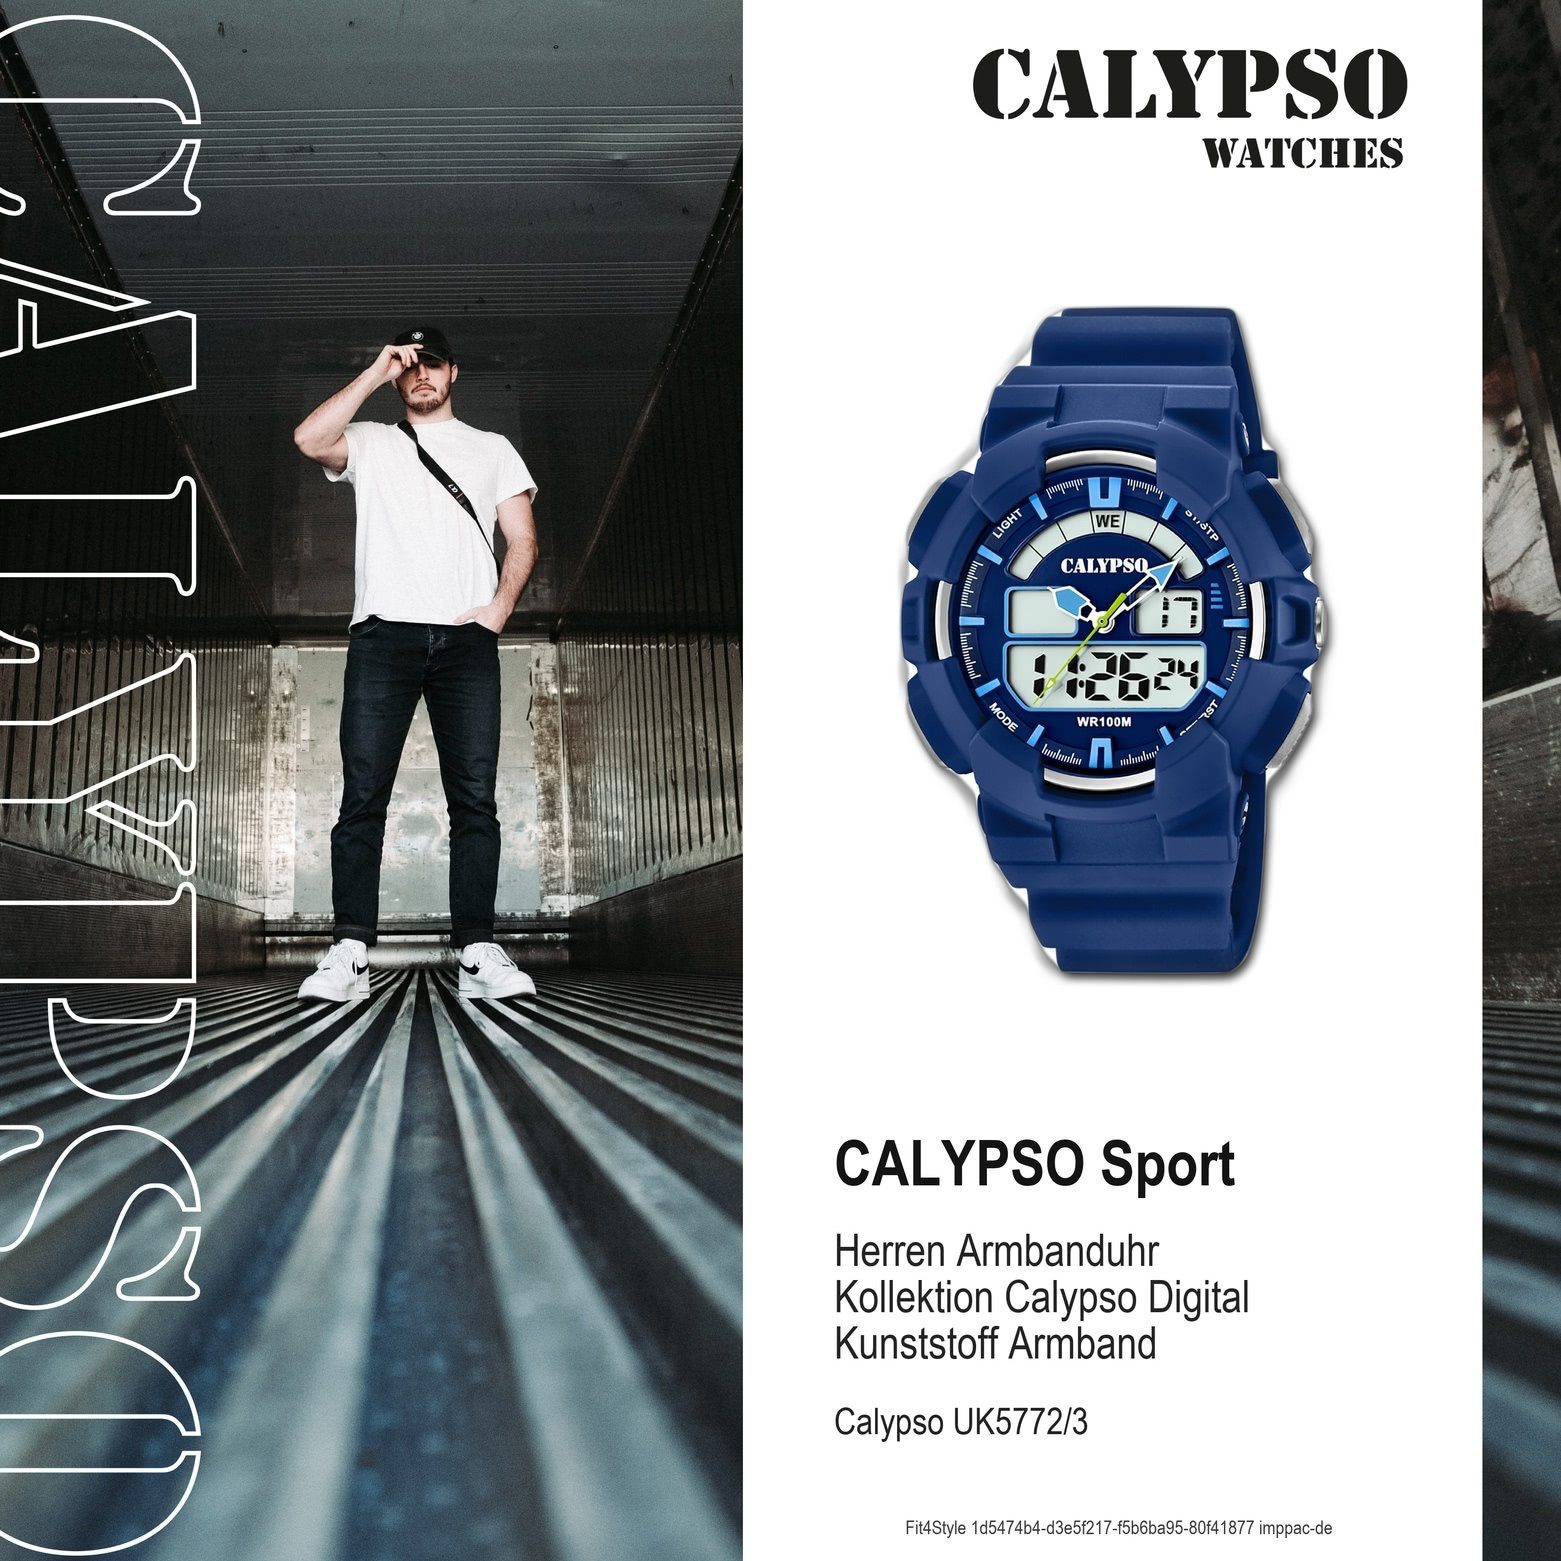 Kunststoff, Herren Calypso Sport Uhr Armbanduhr WATCHES CALYPSO blau, rund, PUarmband Herren Digitaluhr K5772/3,